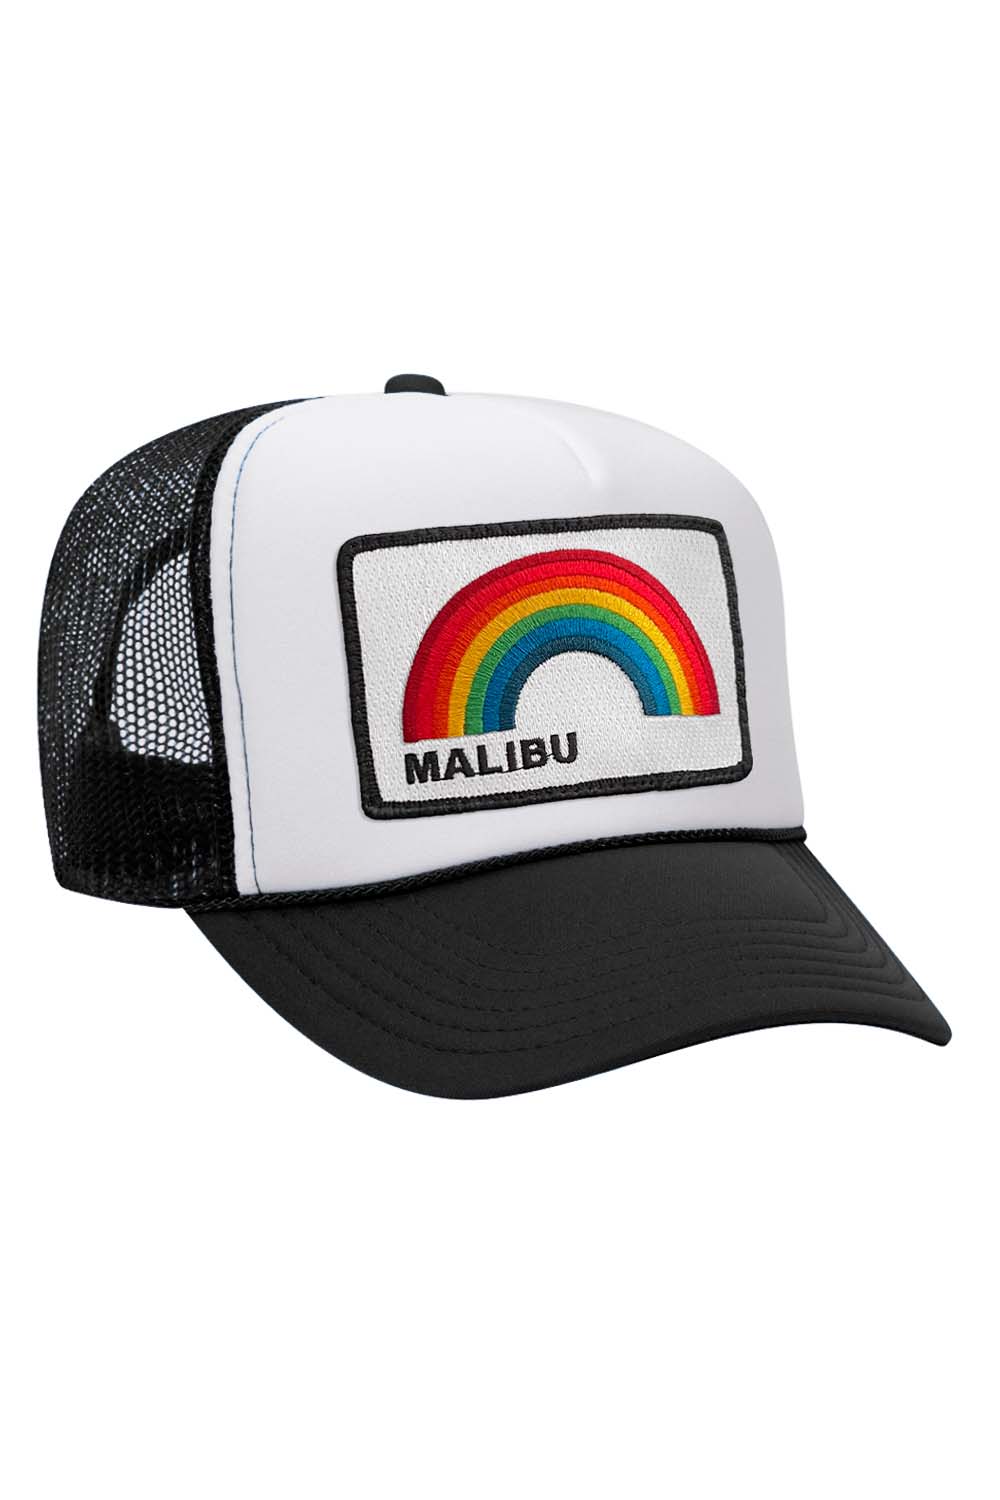 MALIBU RAINBOW TRUCKER HAT HATS Aviator Nation OS BLACK // WHITE // BLACK 